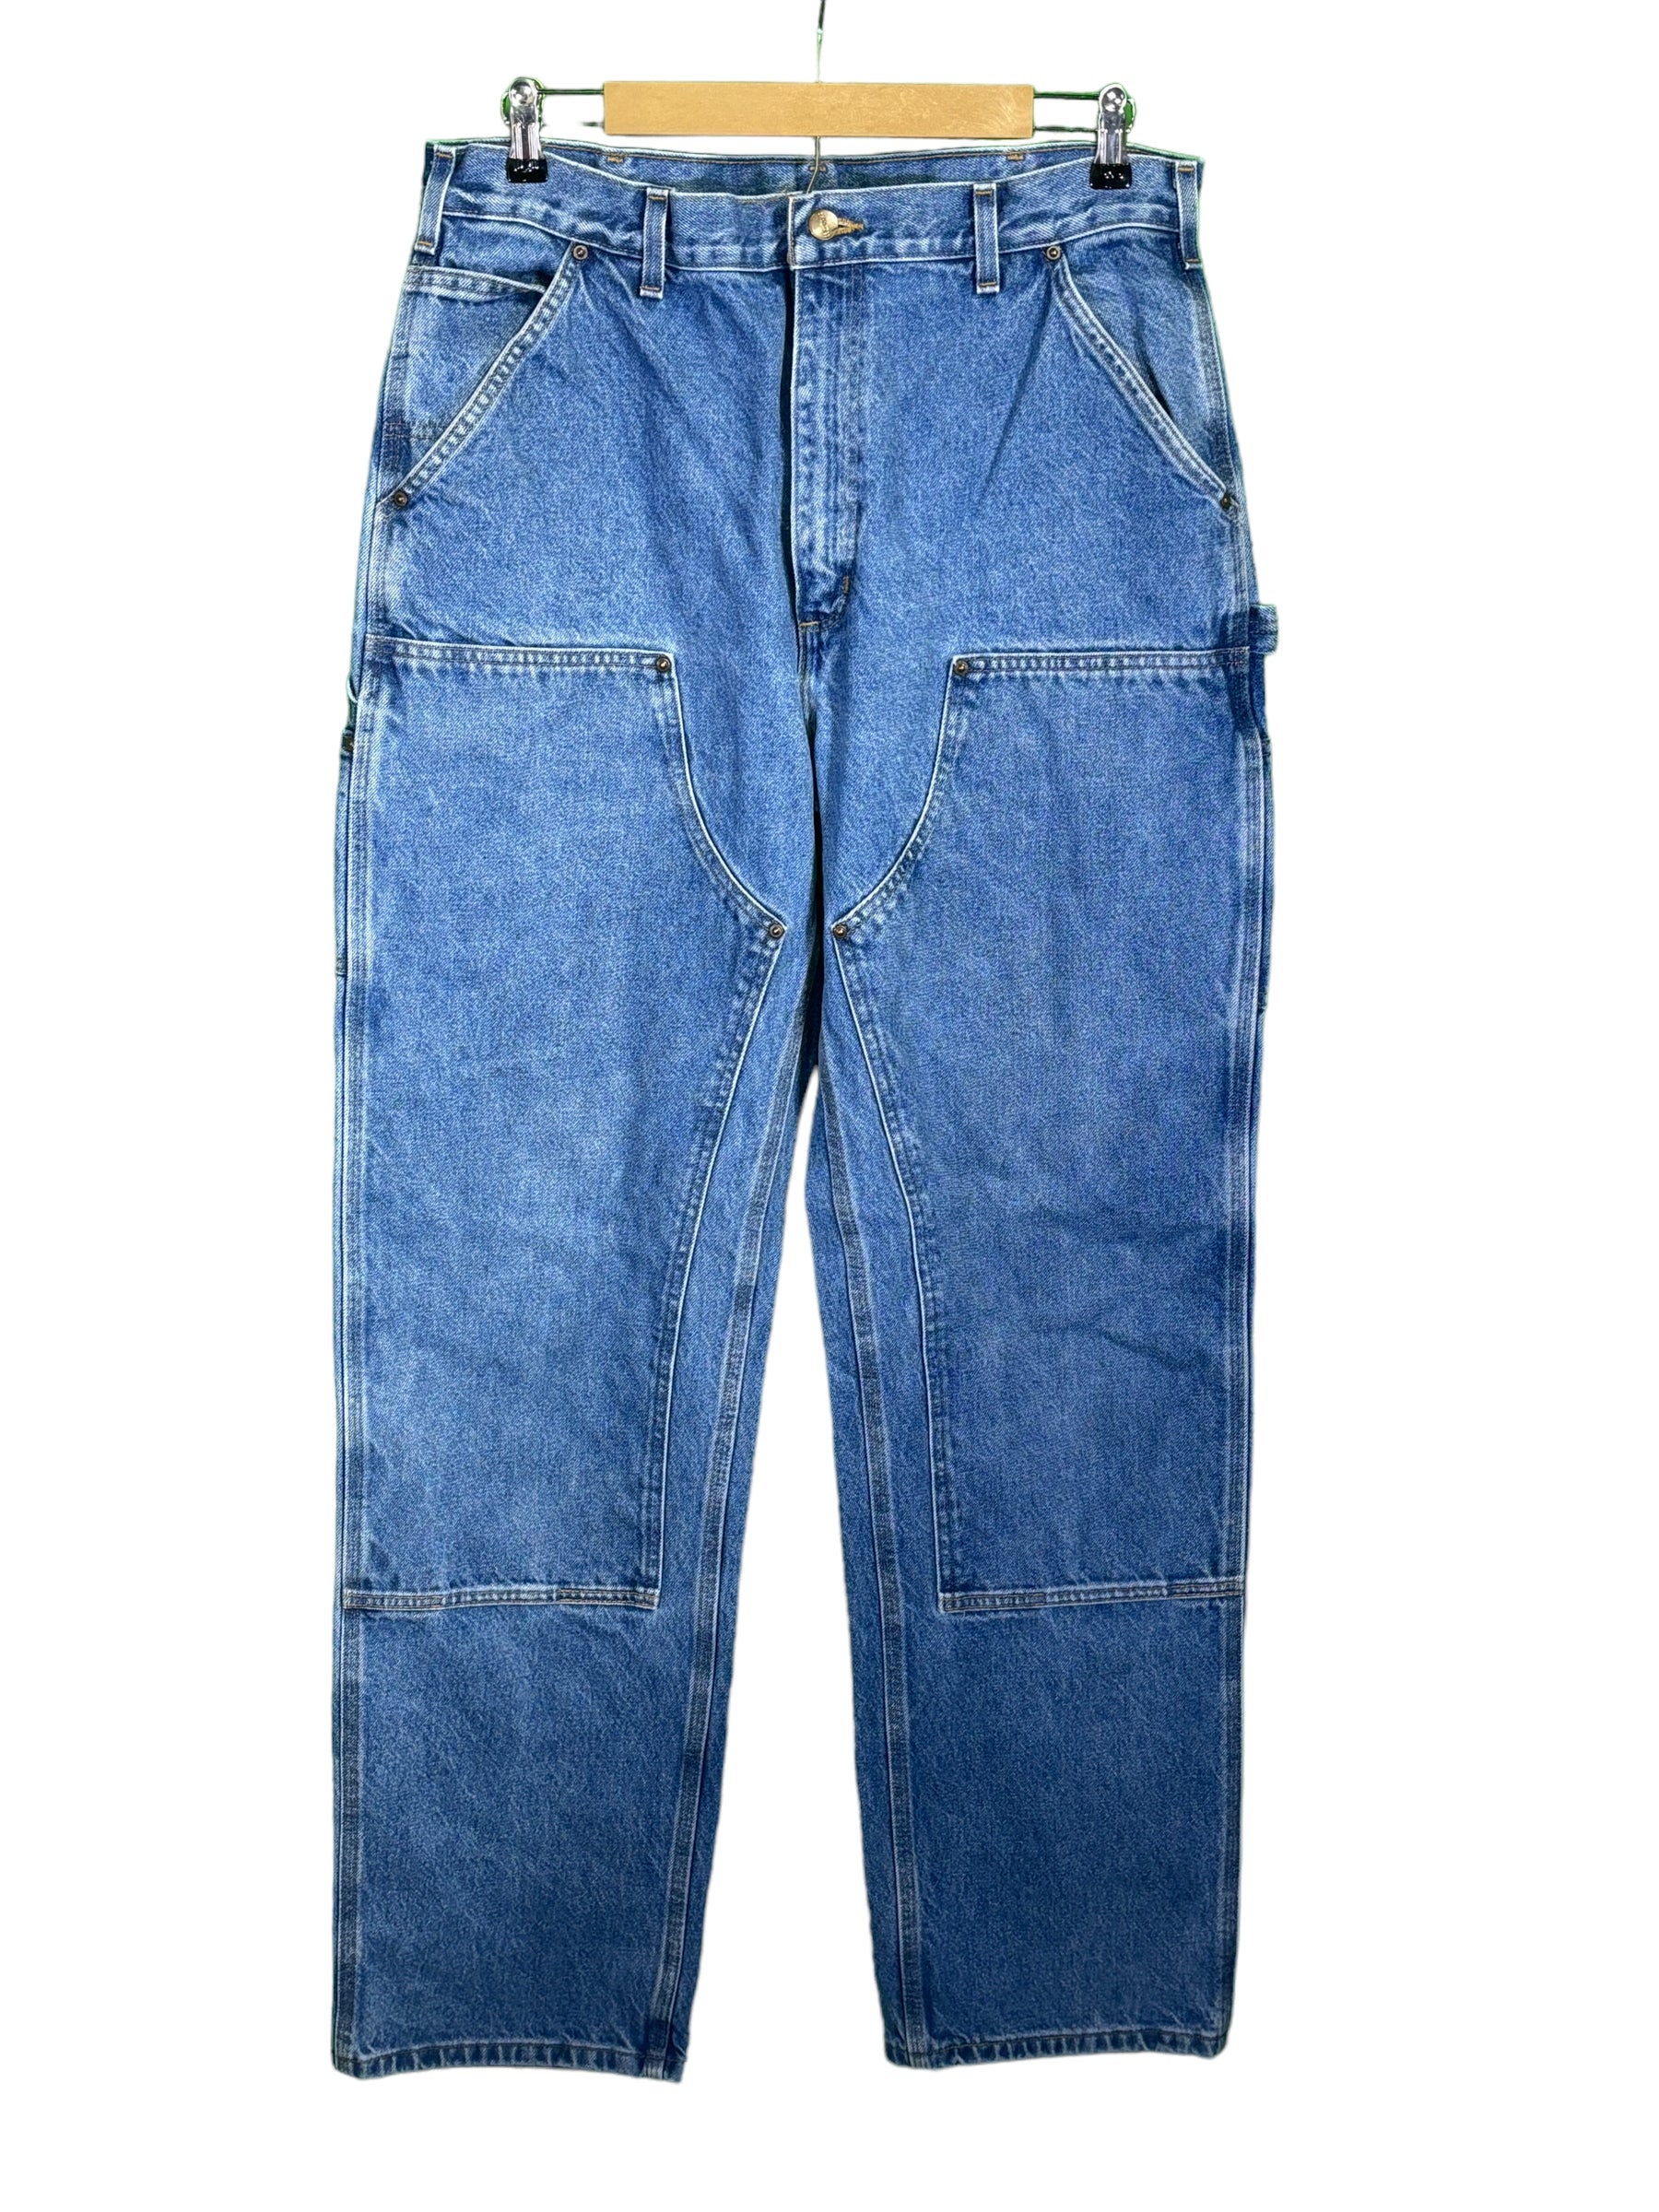 Vintage Carhartt Double Knee Carpenter Denim Jeans Dungaree Size 36x36 ...